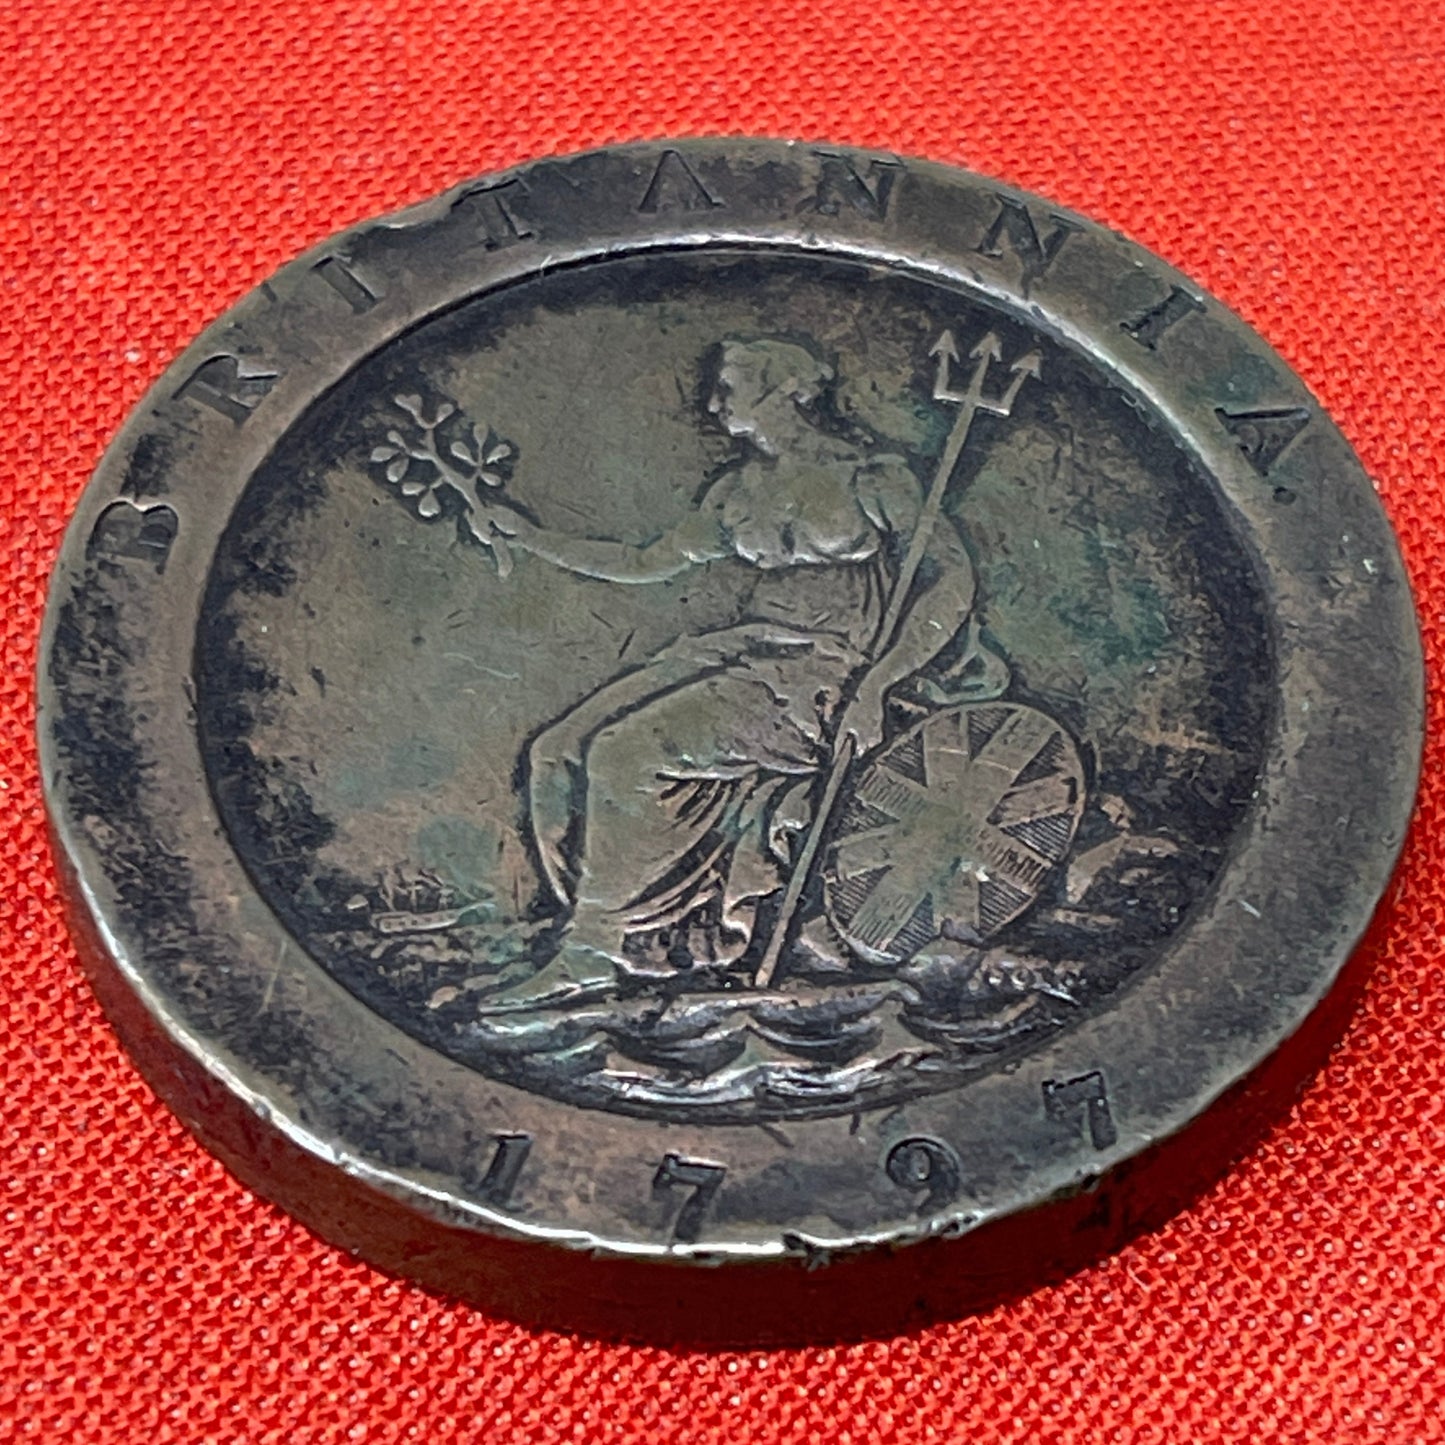 King George III 1797 Cartwheel Twopence